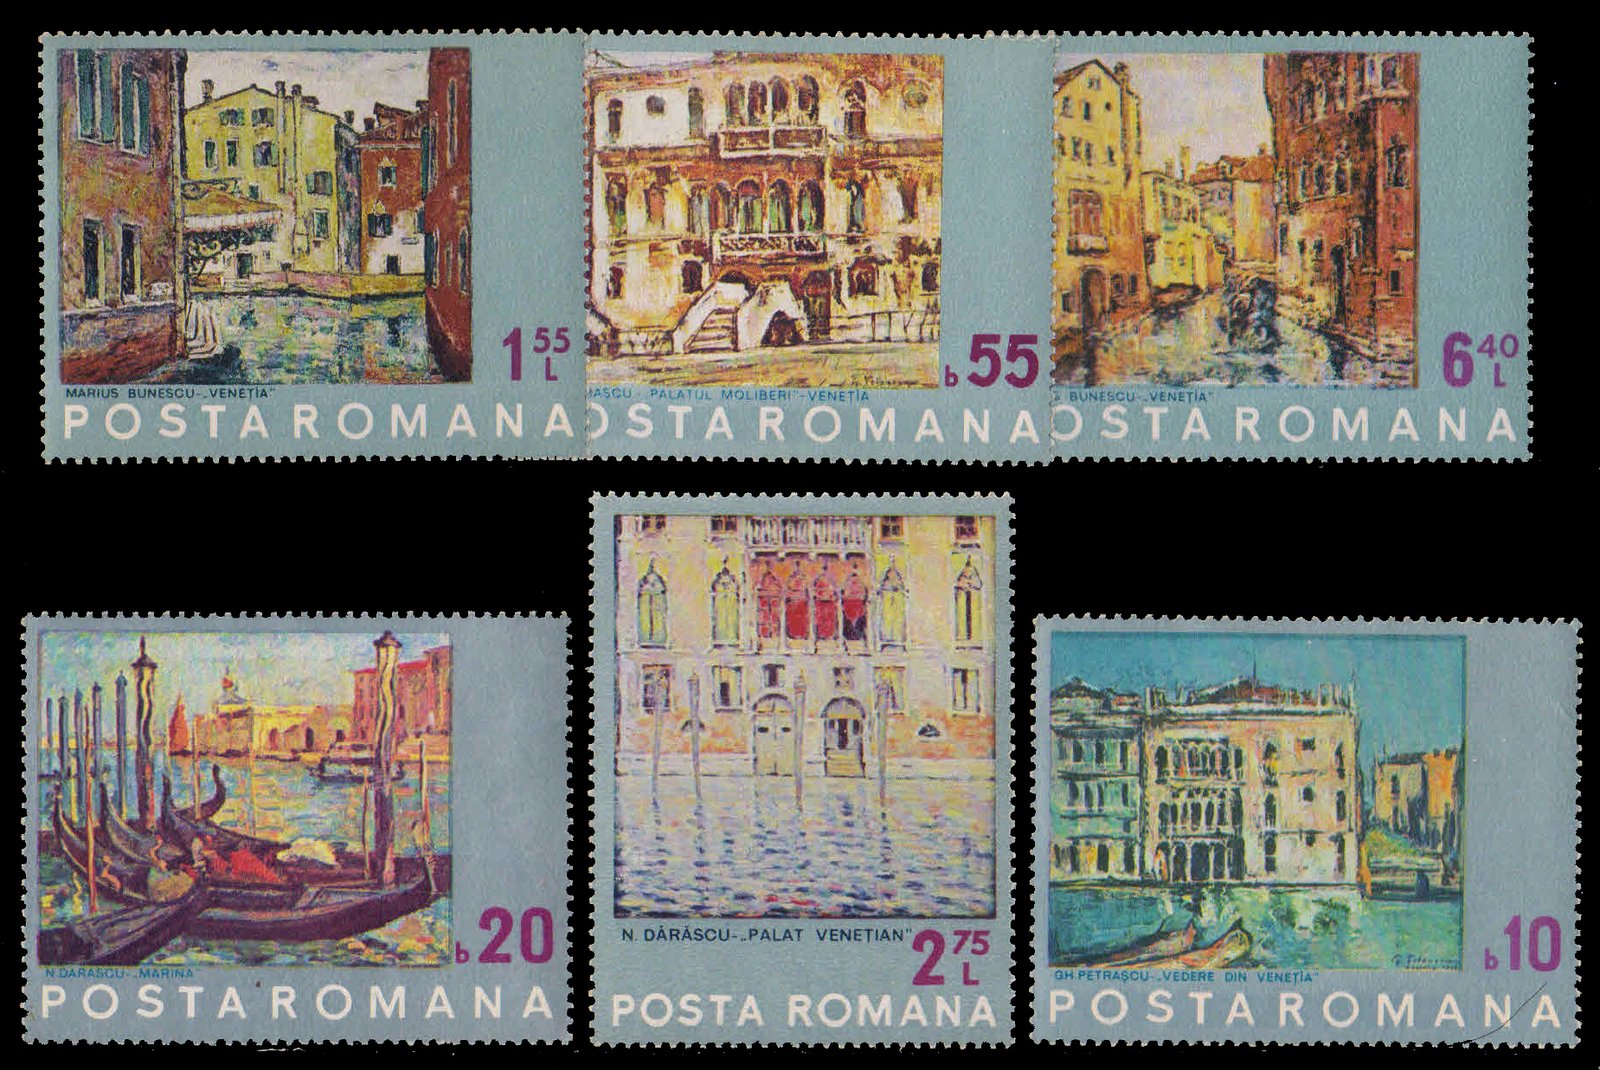 ROMANIA 1972 - UNESCO 'Save Venice' Campaign, Paintings of Venice, Set of 6, MNH, S.G. 3951-56